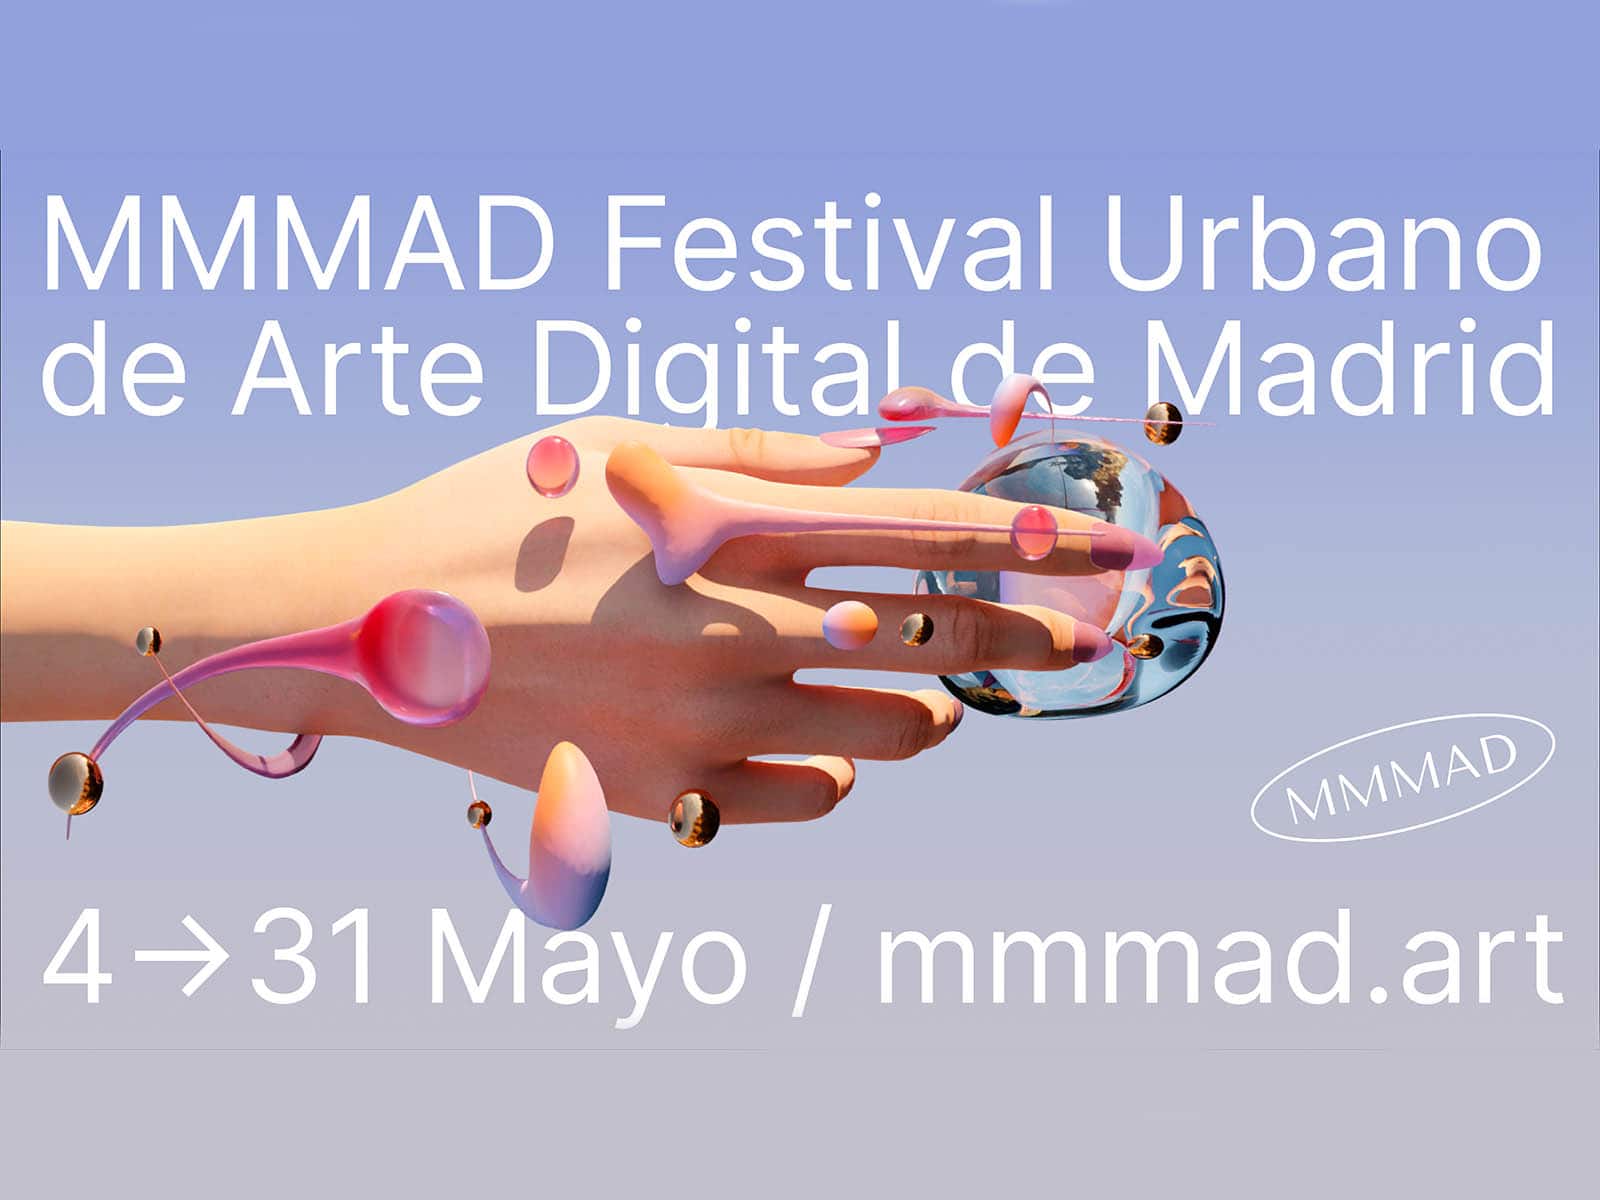 MMMAD: arte digital, performance, música en live y más